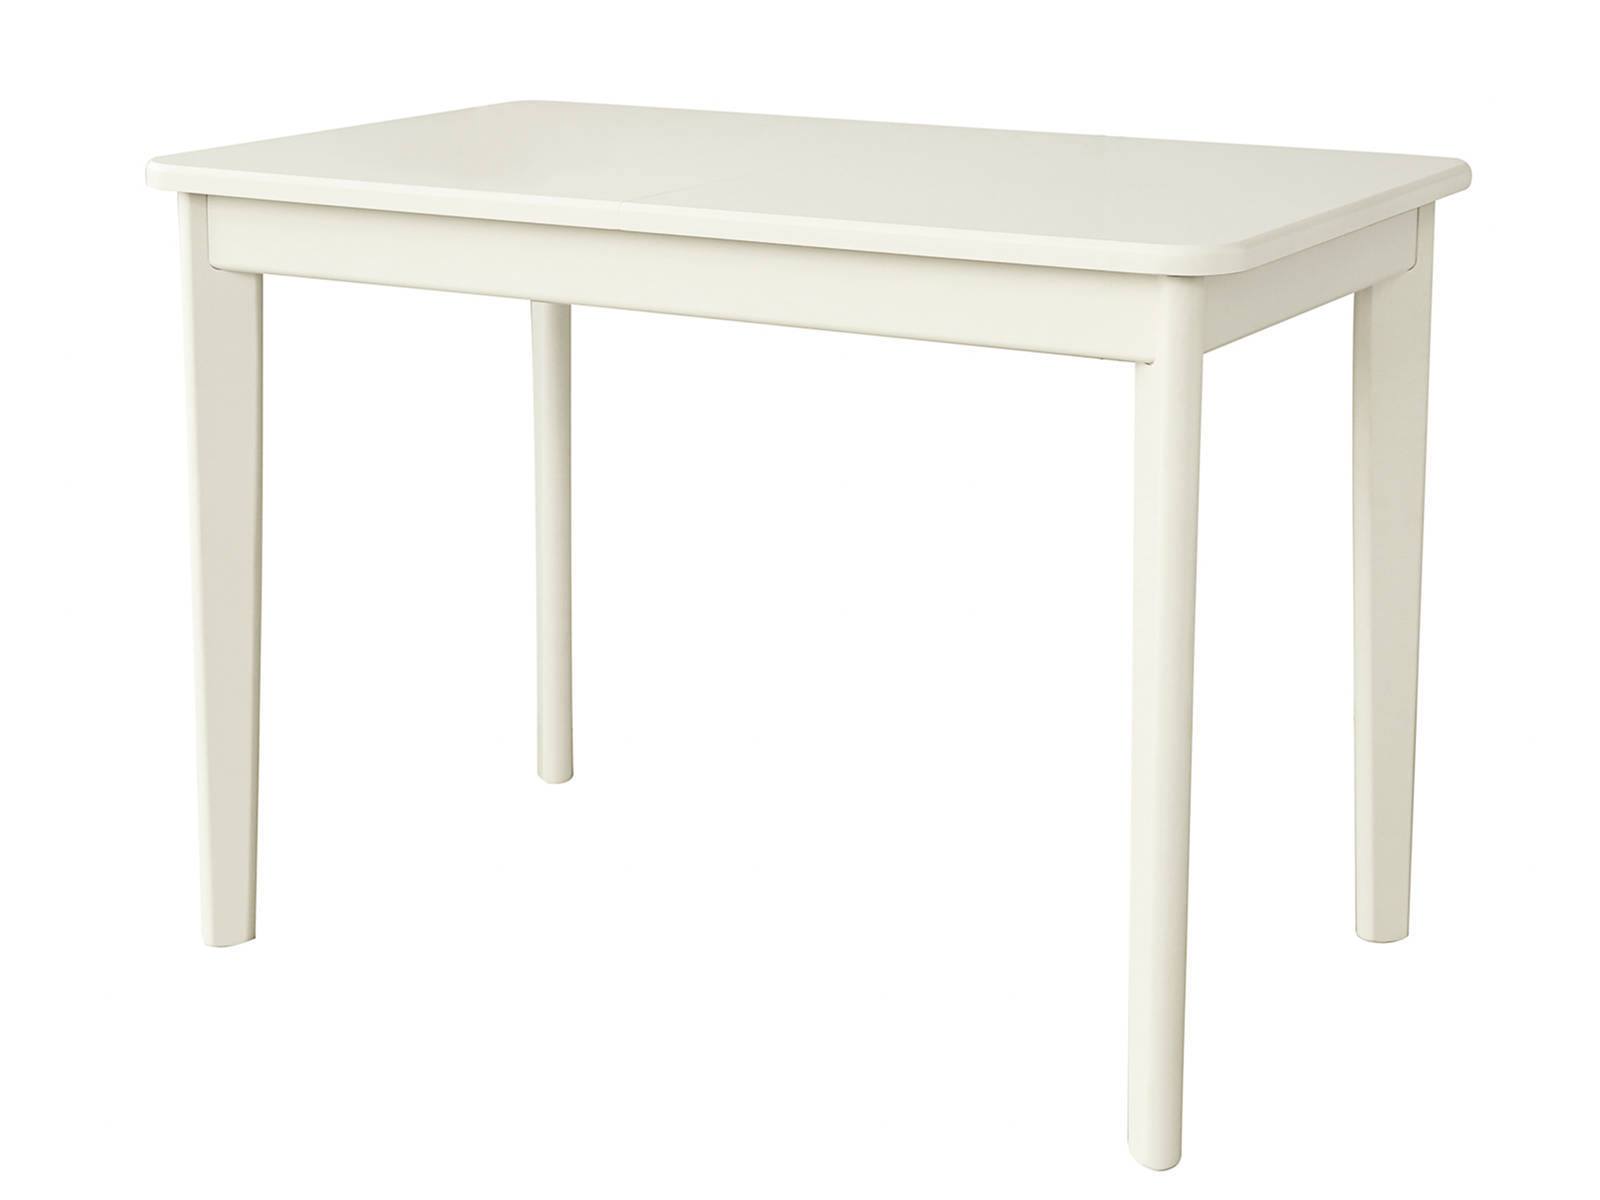 Кухонный стол Блюз 3 Белый, Массив Бук стол кухонный прямоугольный 1 1х0 73 м белый бук table 110 15356